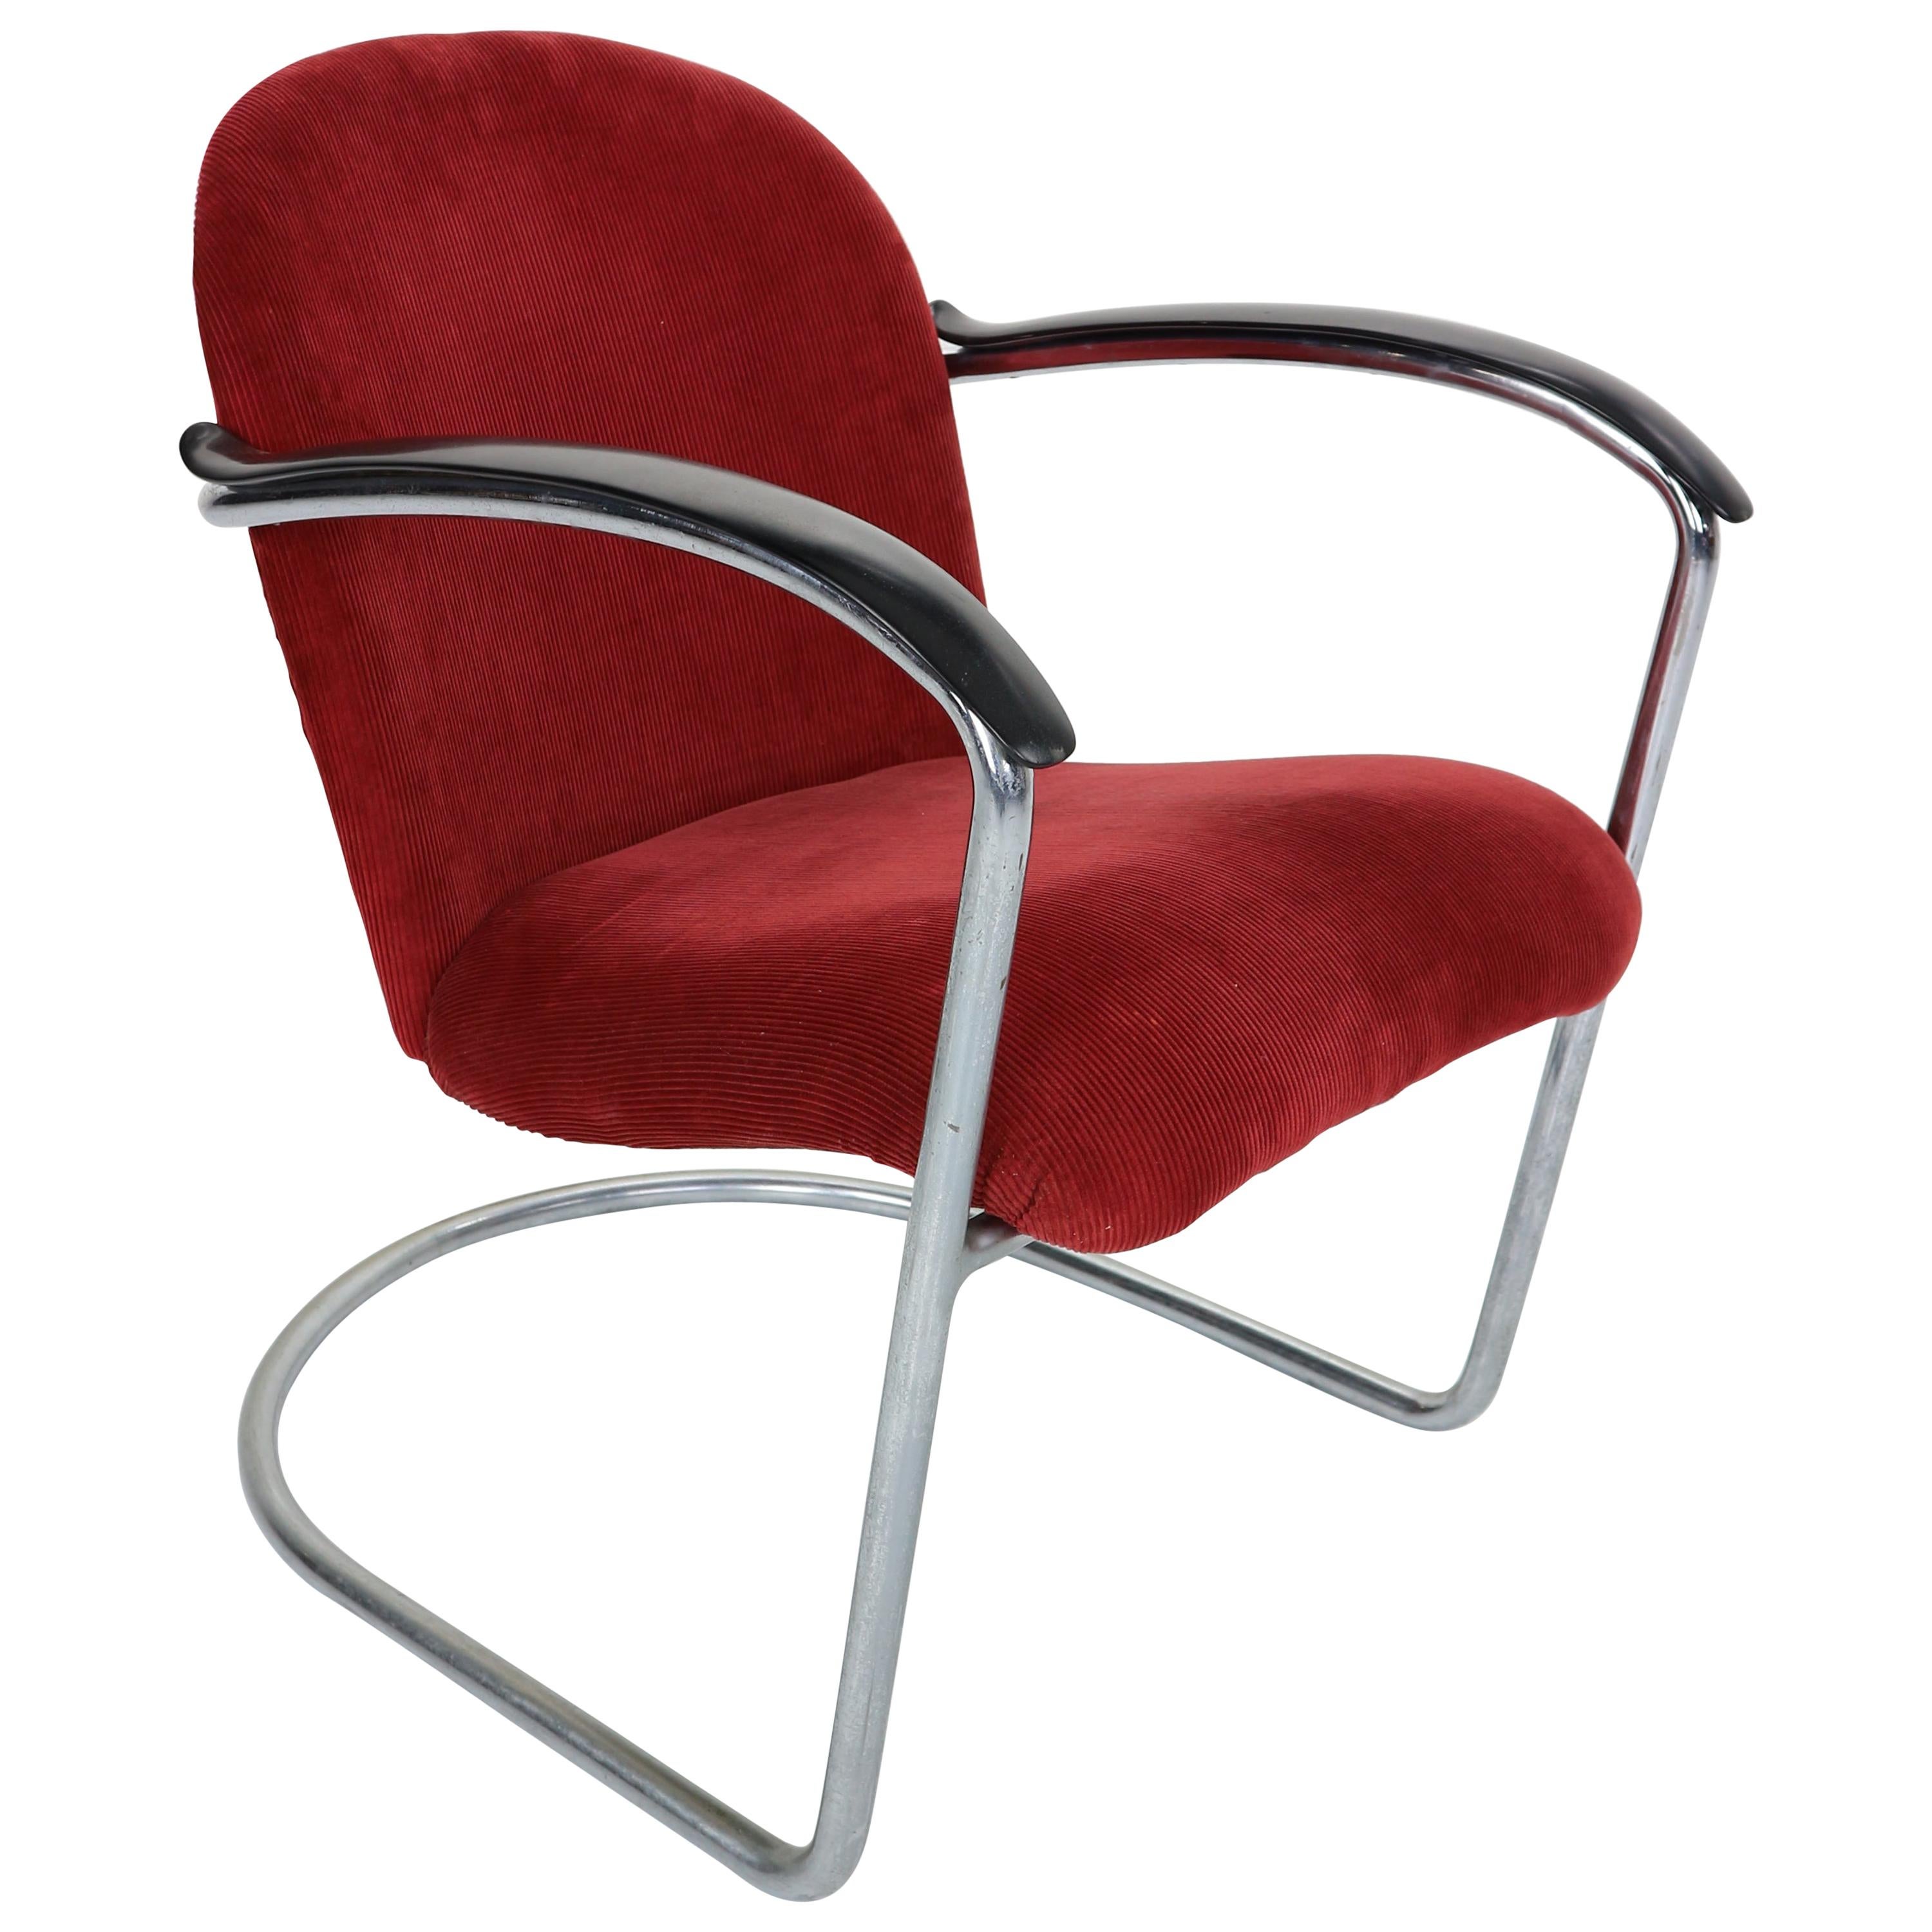 Gispen M-414 Chrome & Red Rib Fabric Easy Lounge, Armchair by W.H. Gispen, 1935